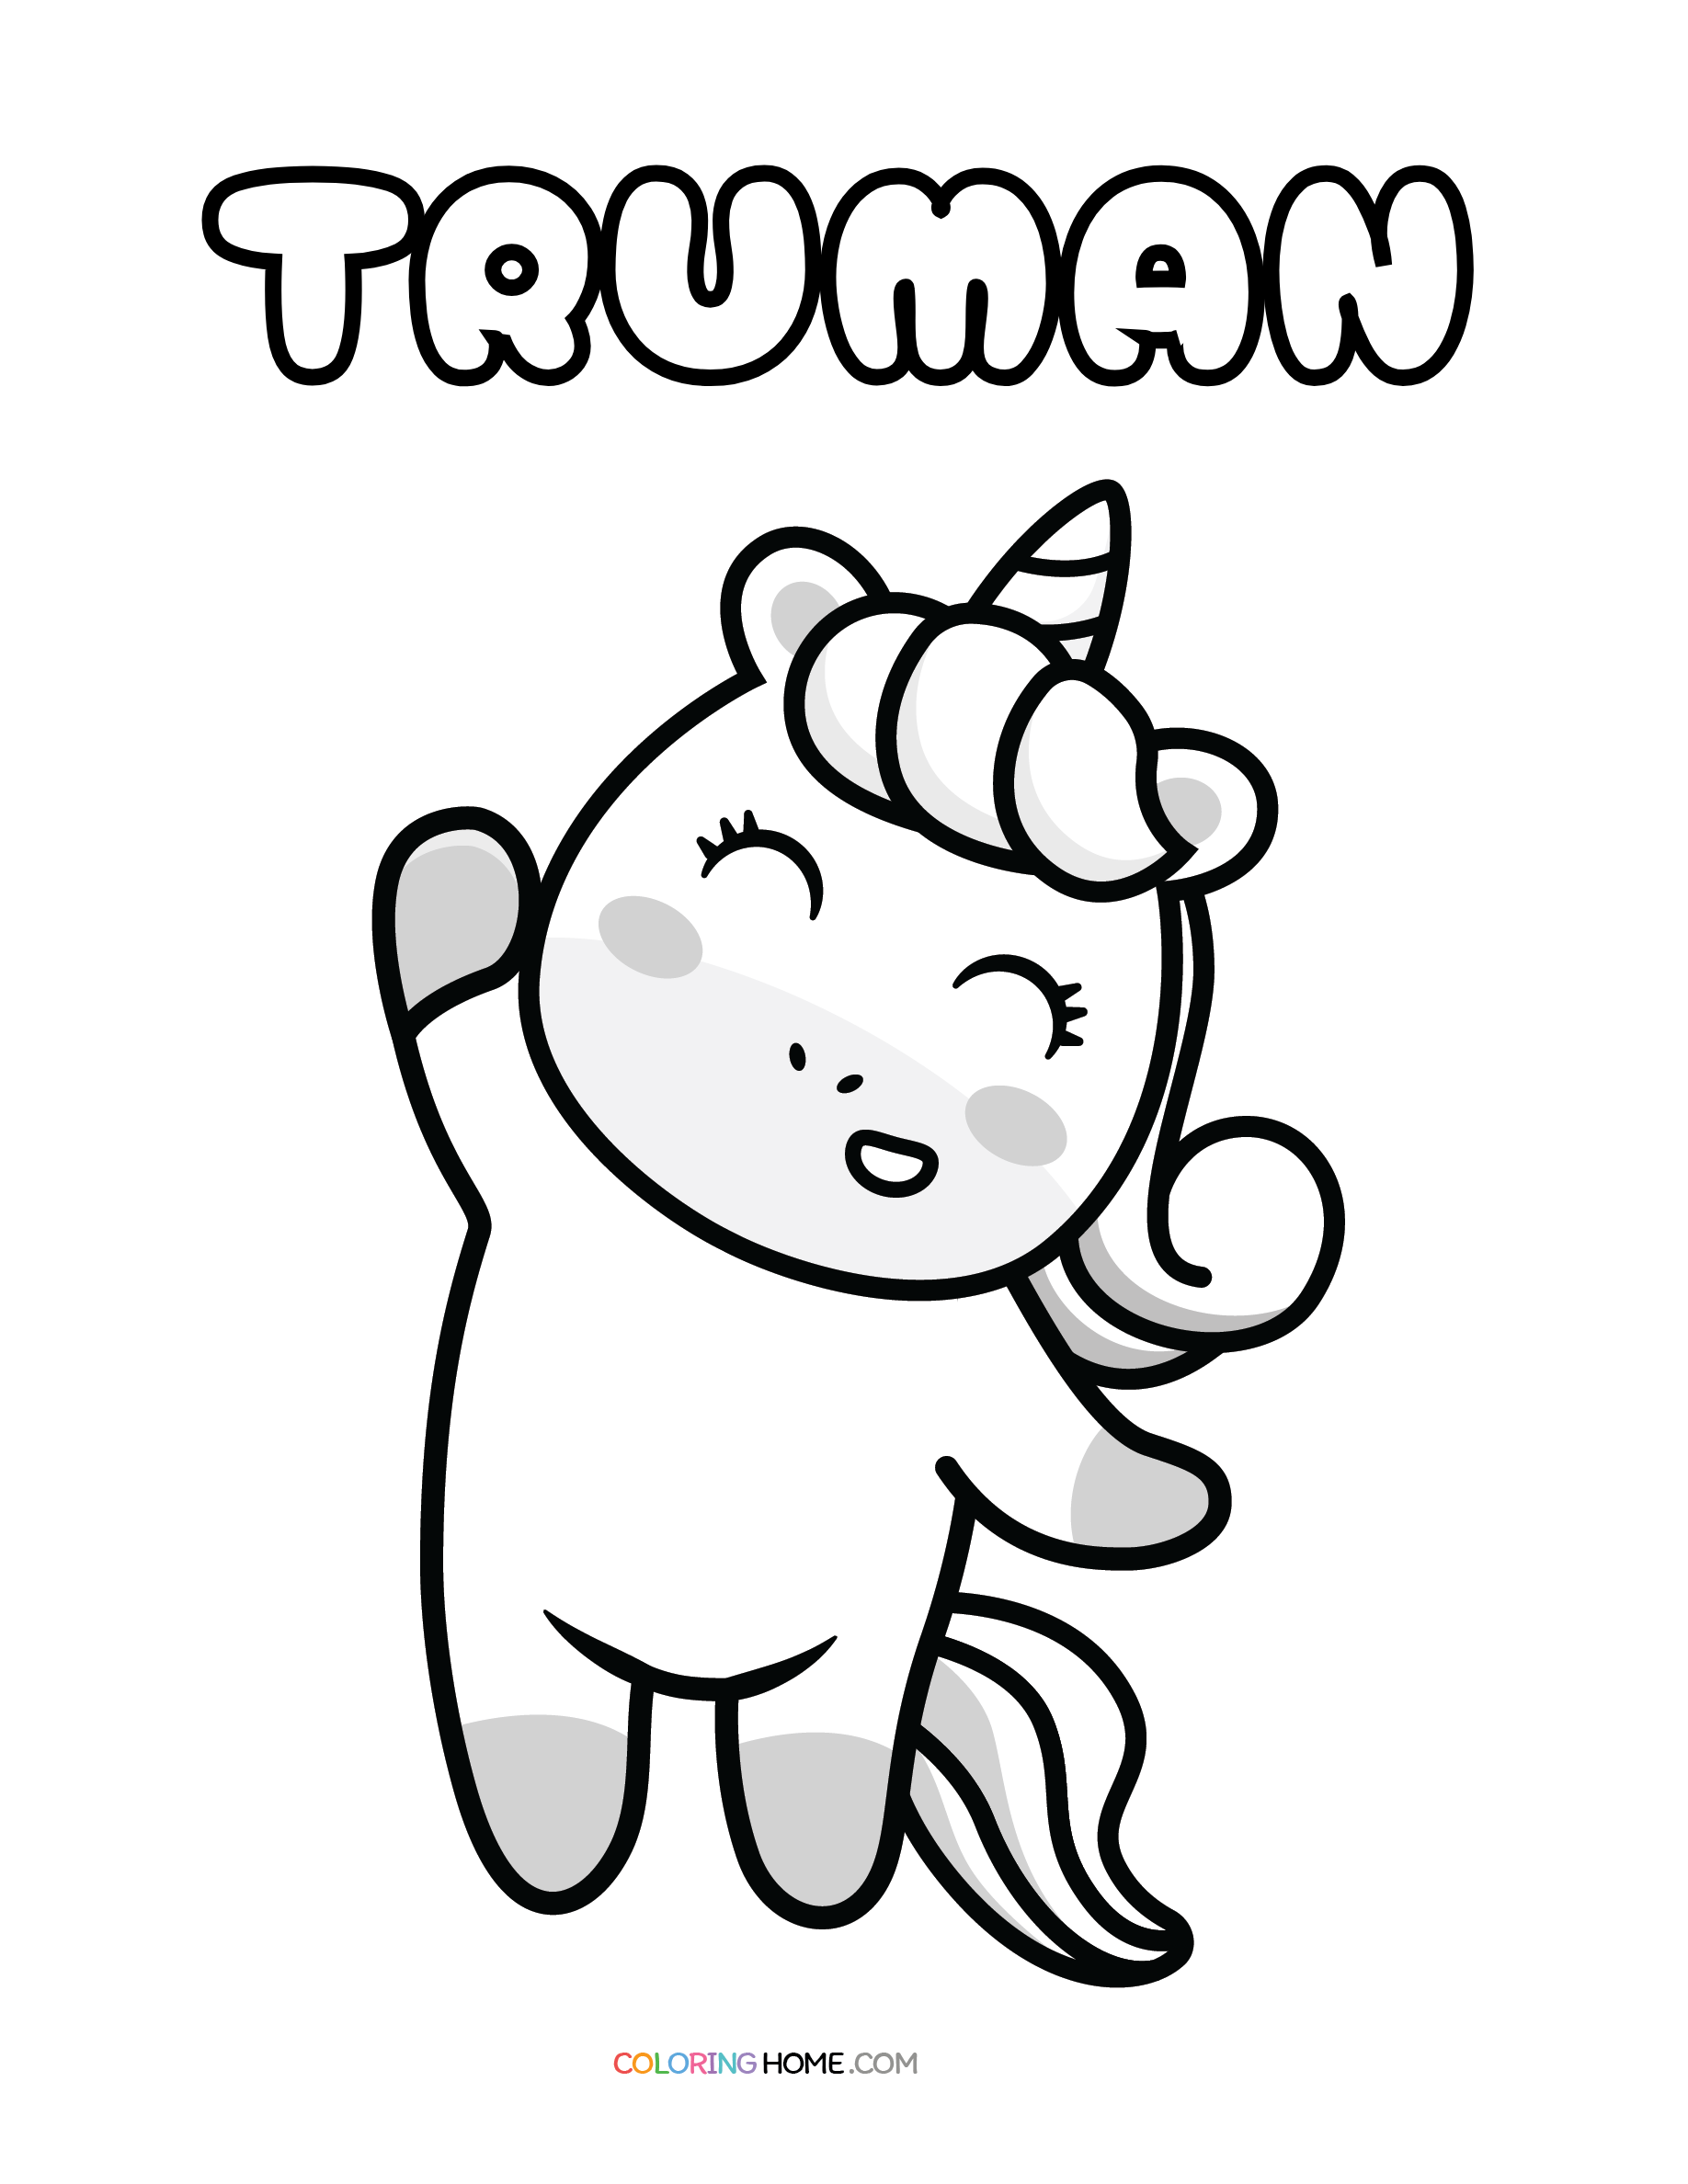 Truman unicorn coloring page